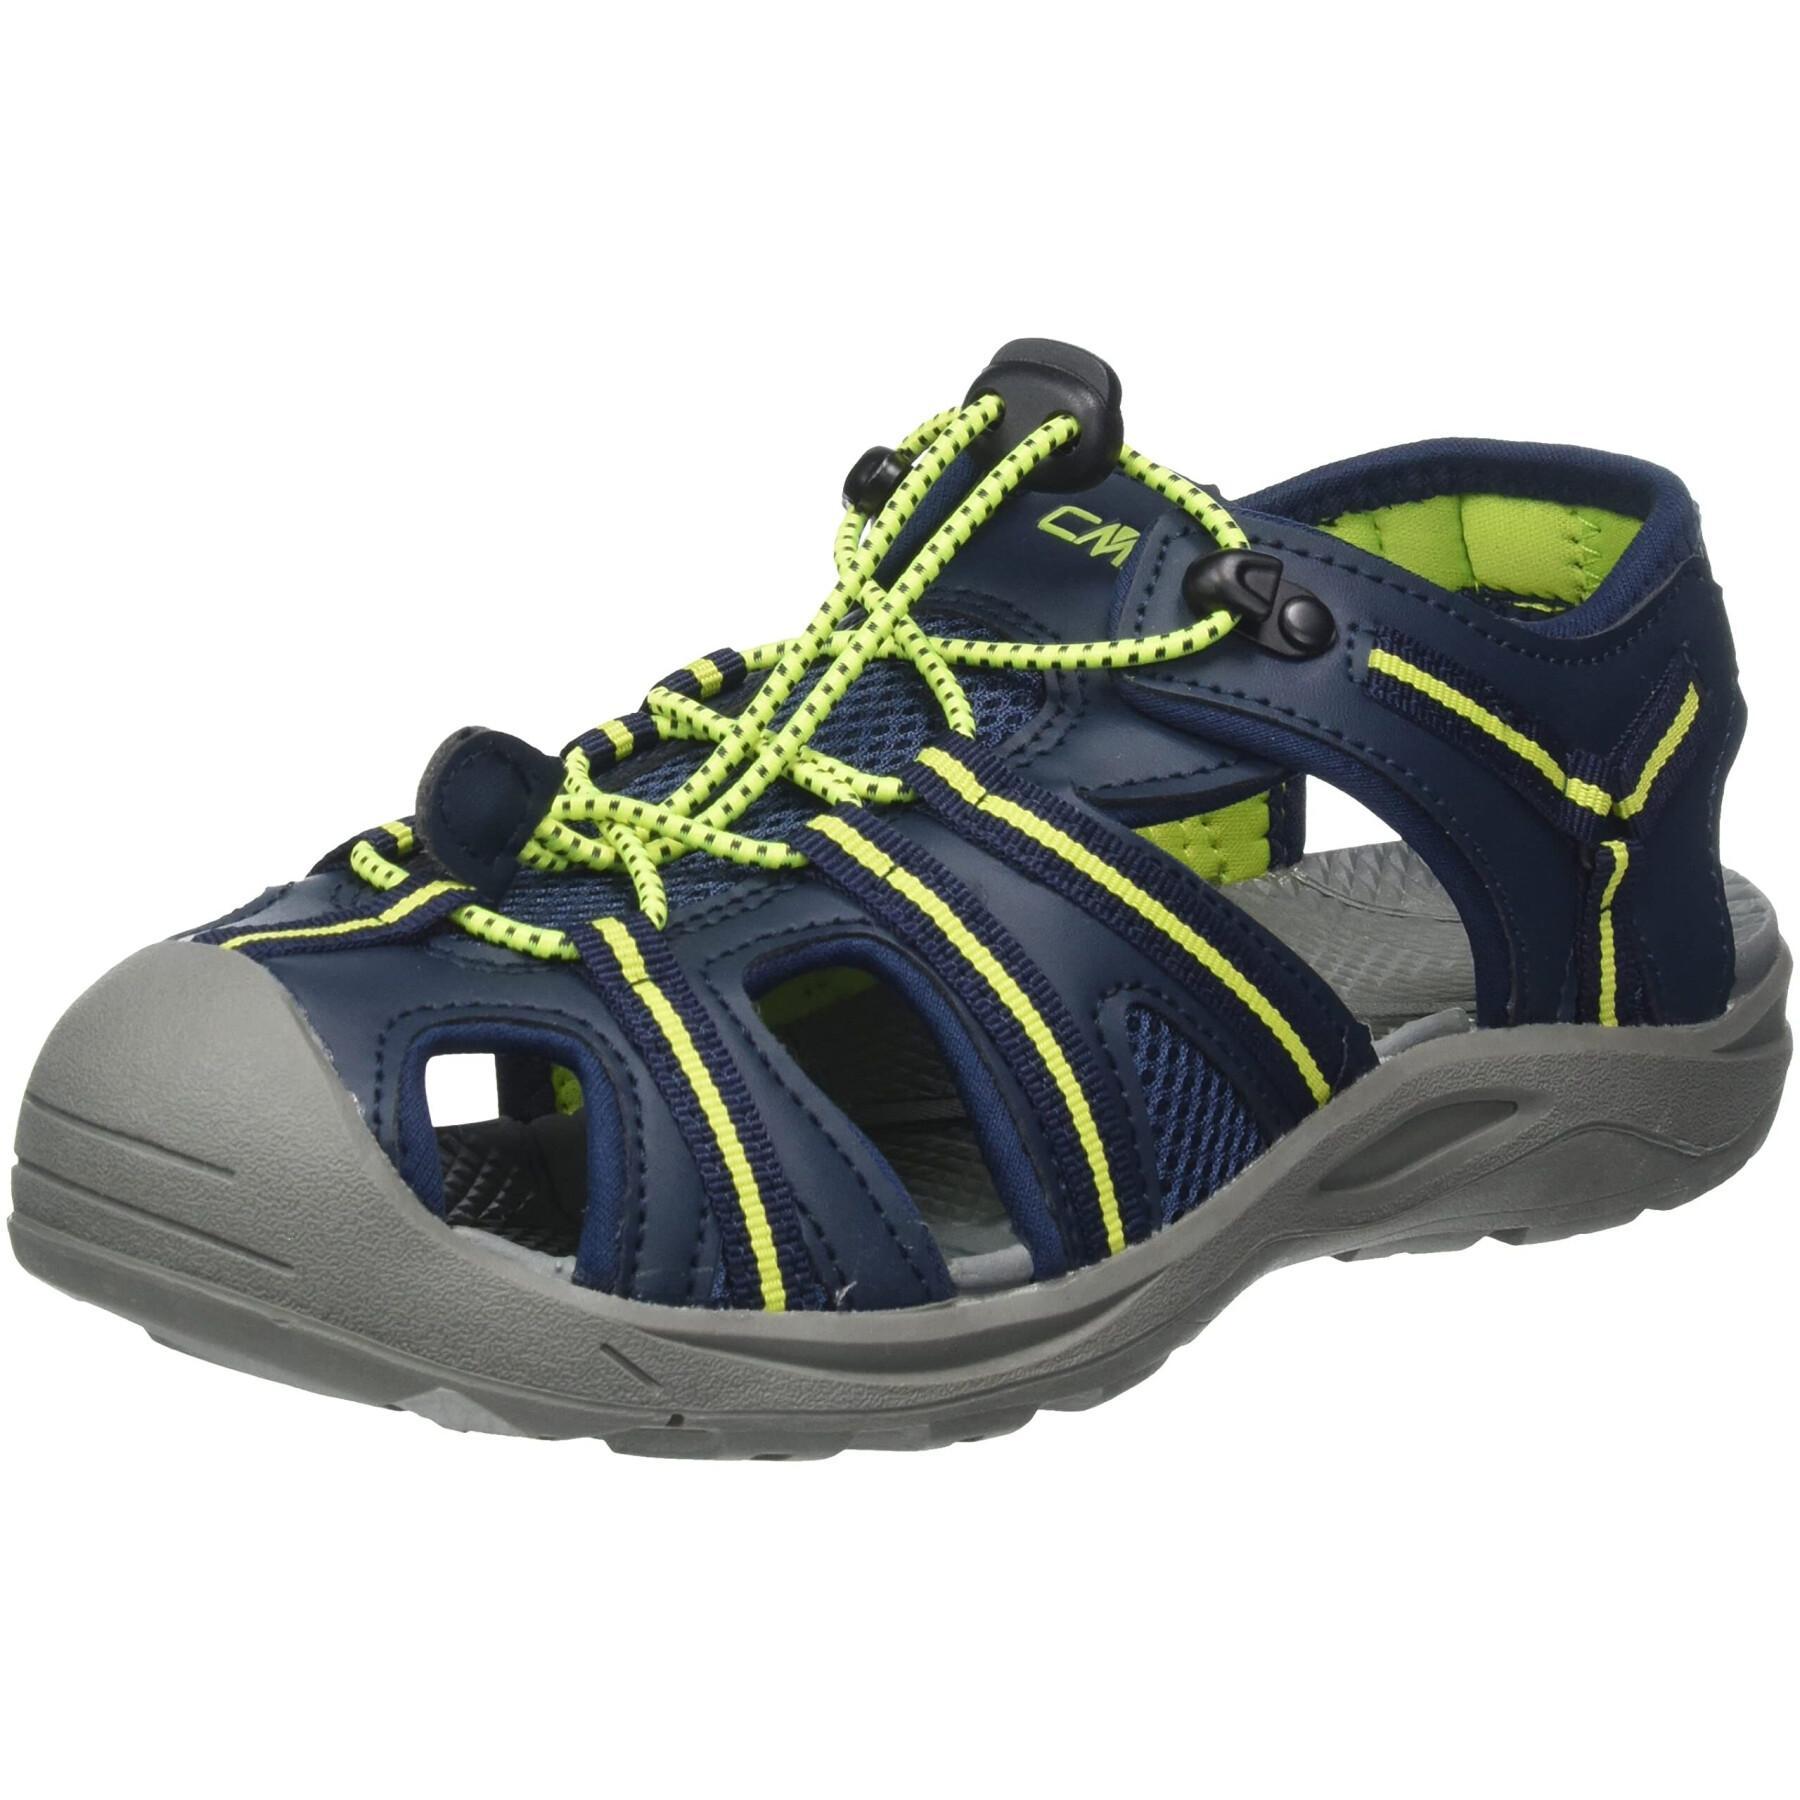 Children\'s sandals CMP - Shoes 2.0 Hiking Hiking - Aquari Hiking Sandals 